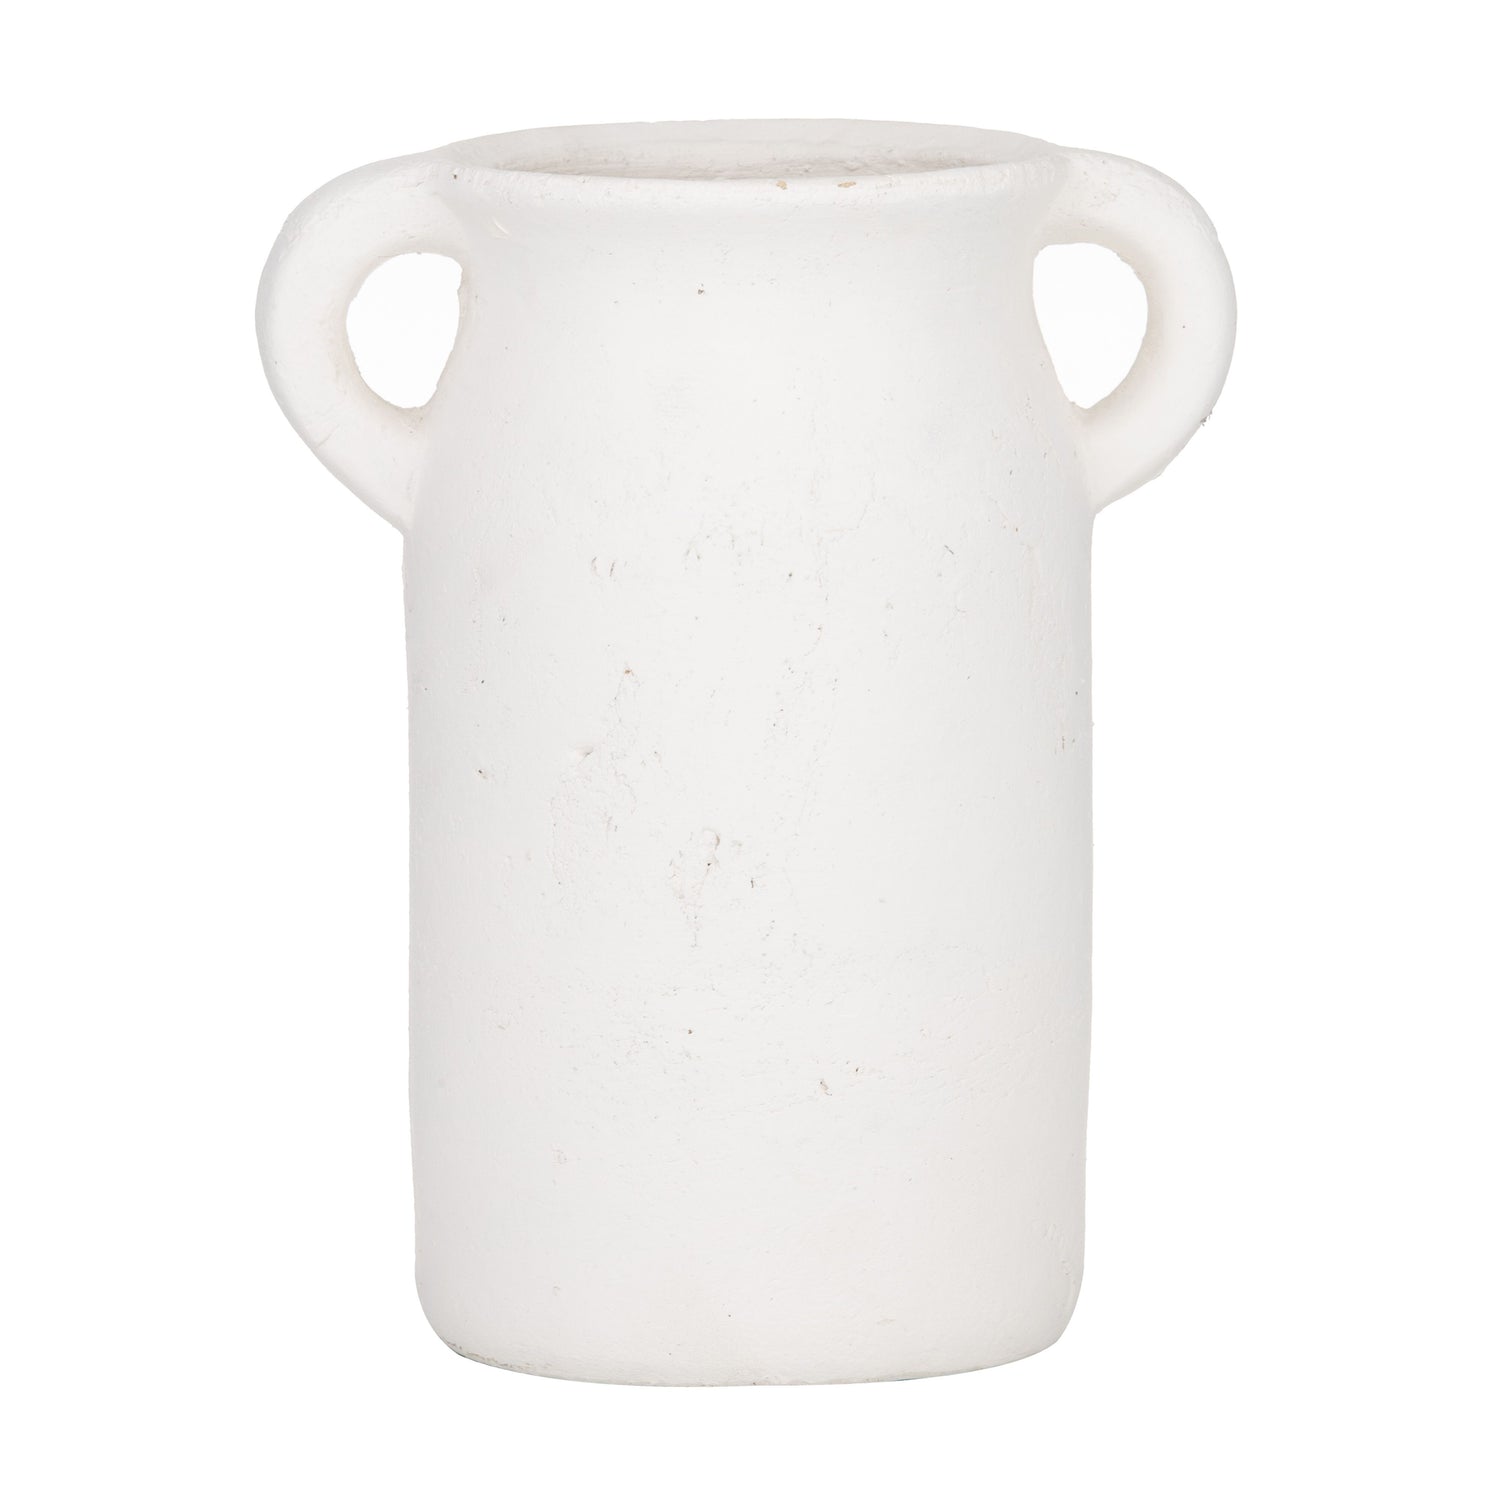 Rosario Vase - White Terracotta Vase with handles